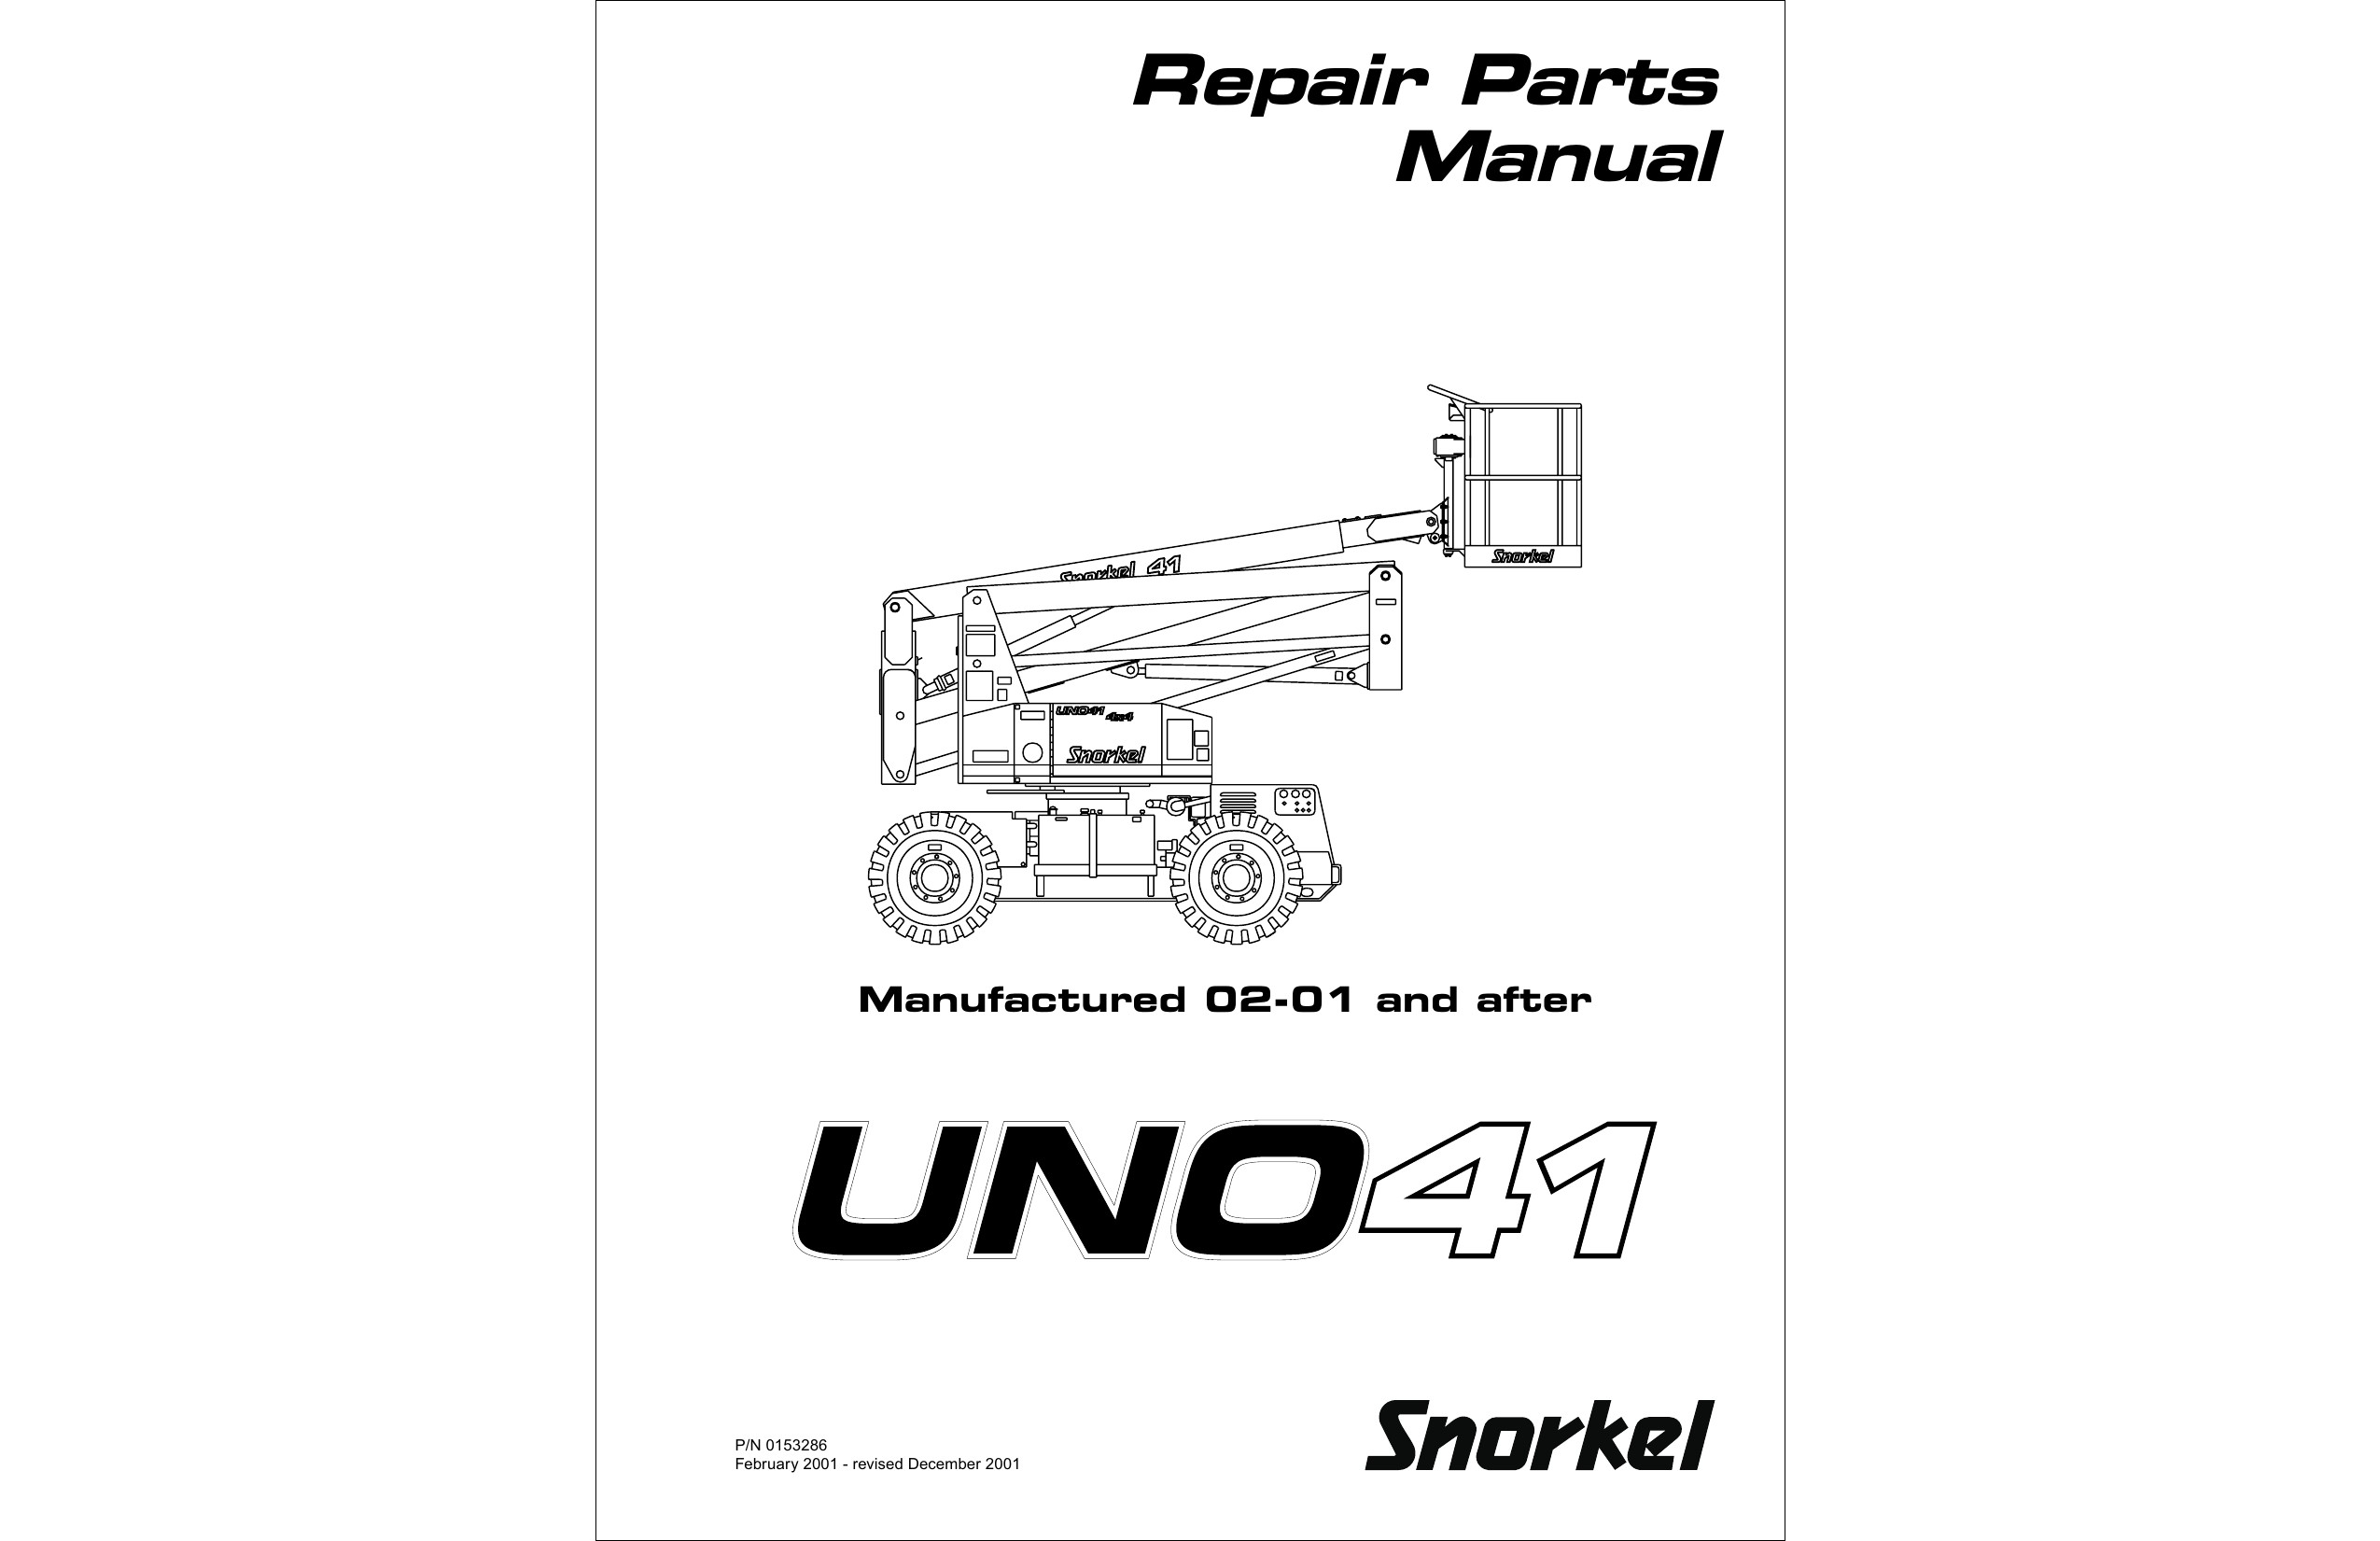 Wiring Schematics for A 41g Uno Snokel Lift Repair Parts Manual